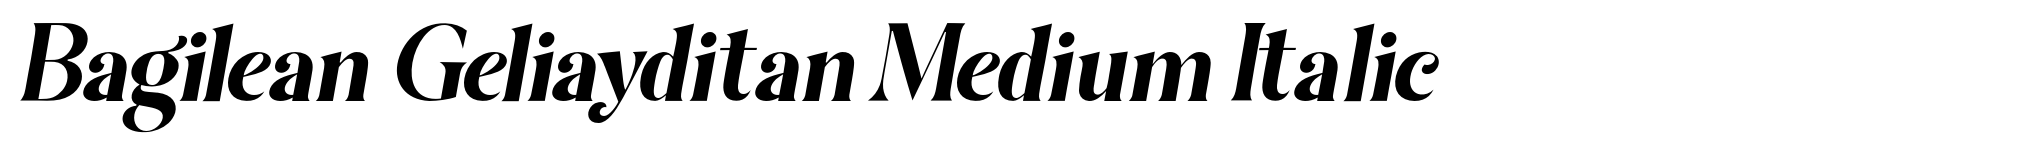 Bagilean Geliayditan Medium Italic image